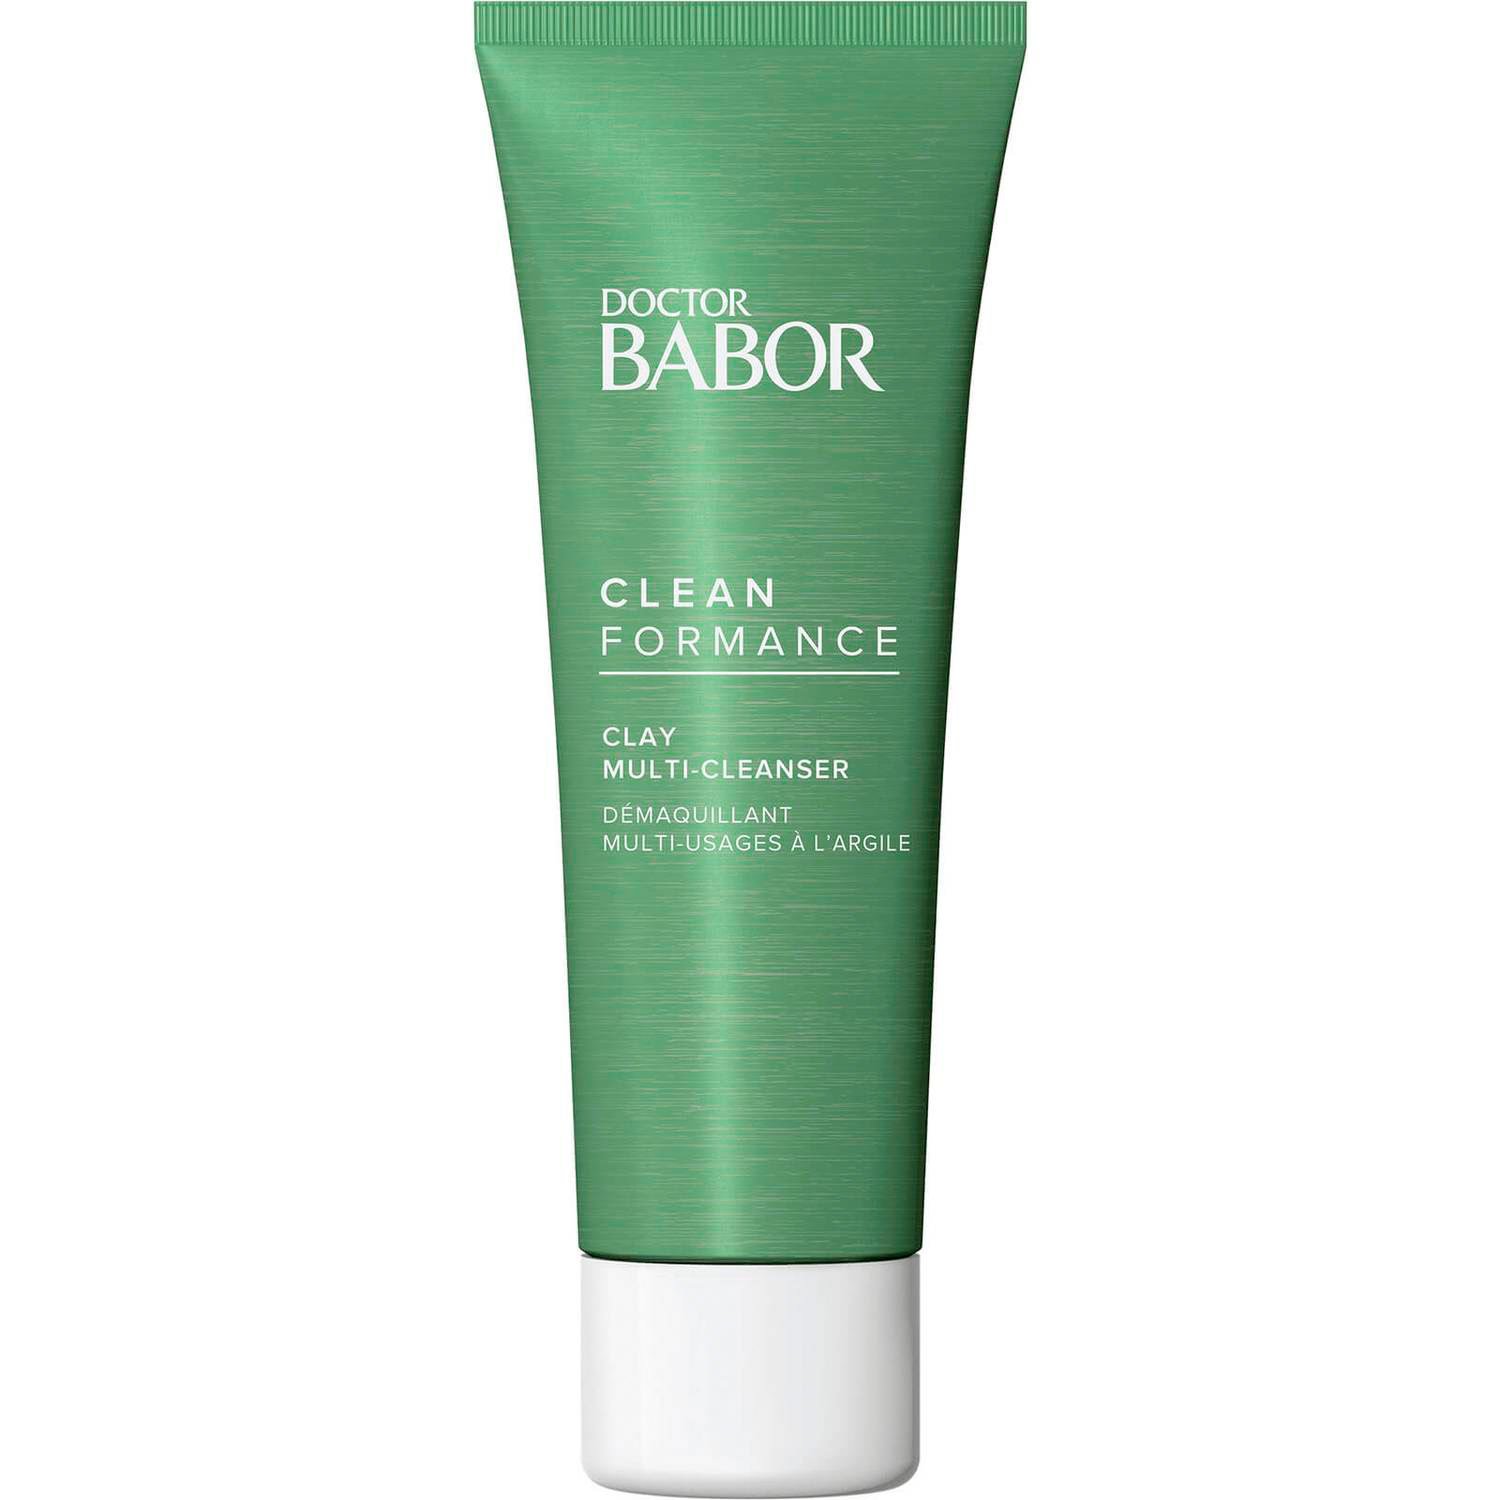 Крем-маска для умывания Babor Doctor Babor Clean Formance Clay Multi-Cleanser с глиной, 50 мл - фото 1